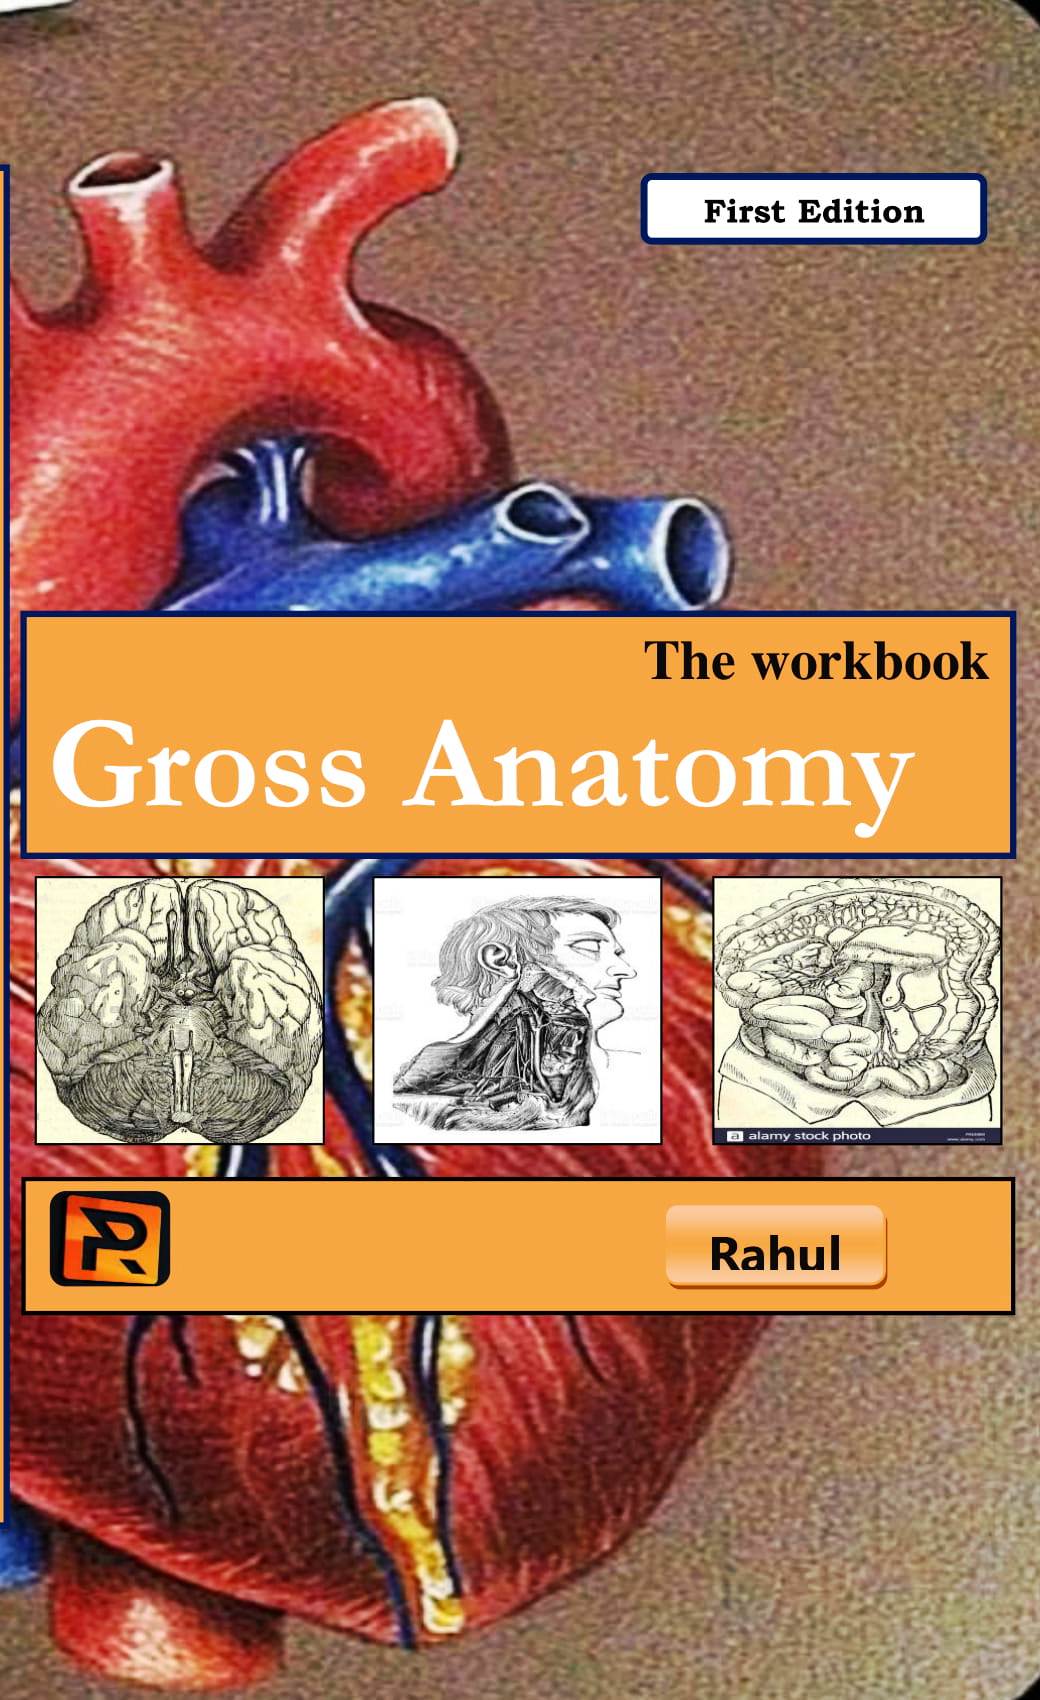 The Workbook of Gross Anatomy